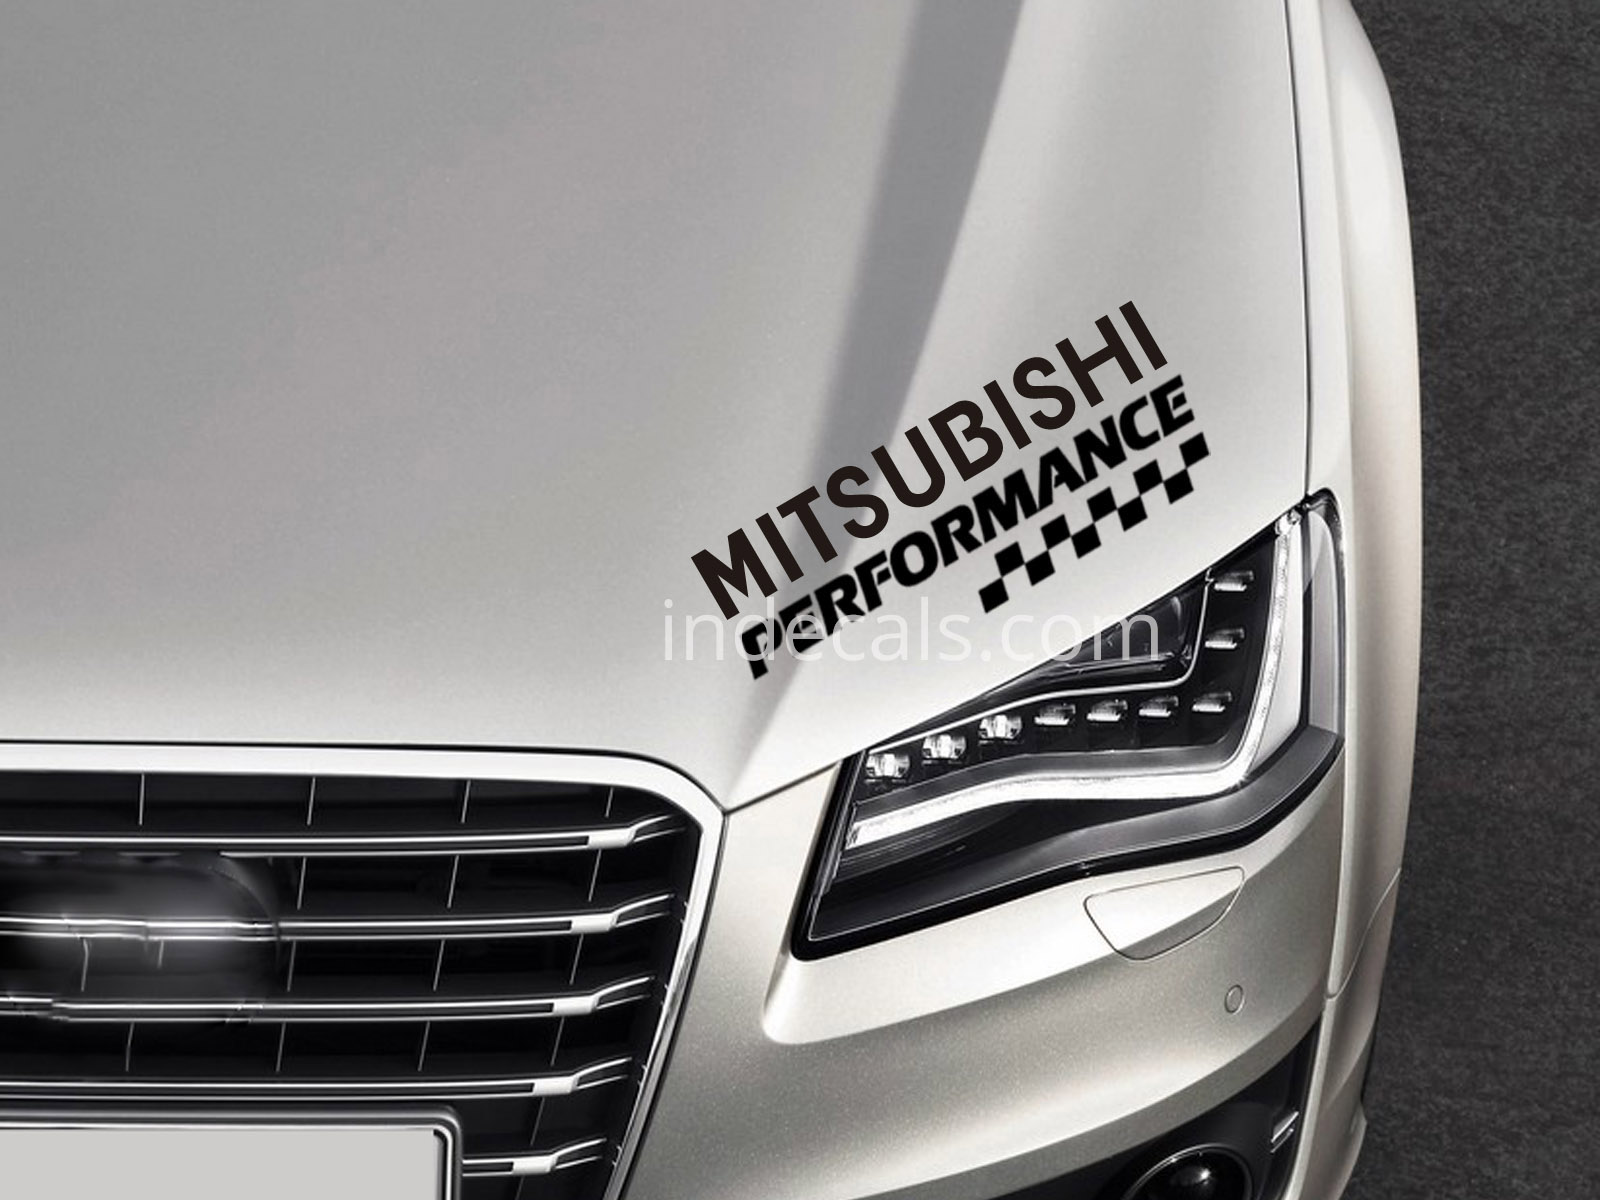 1 x Mitsubishi Performance Sticker - Black